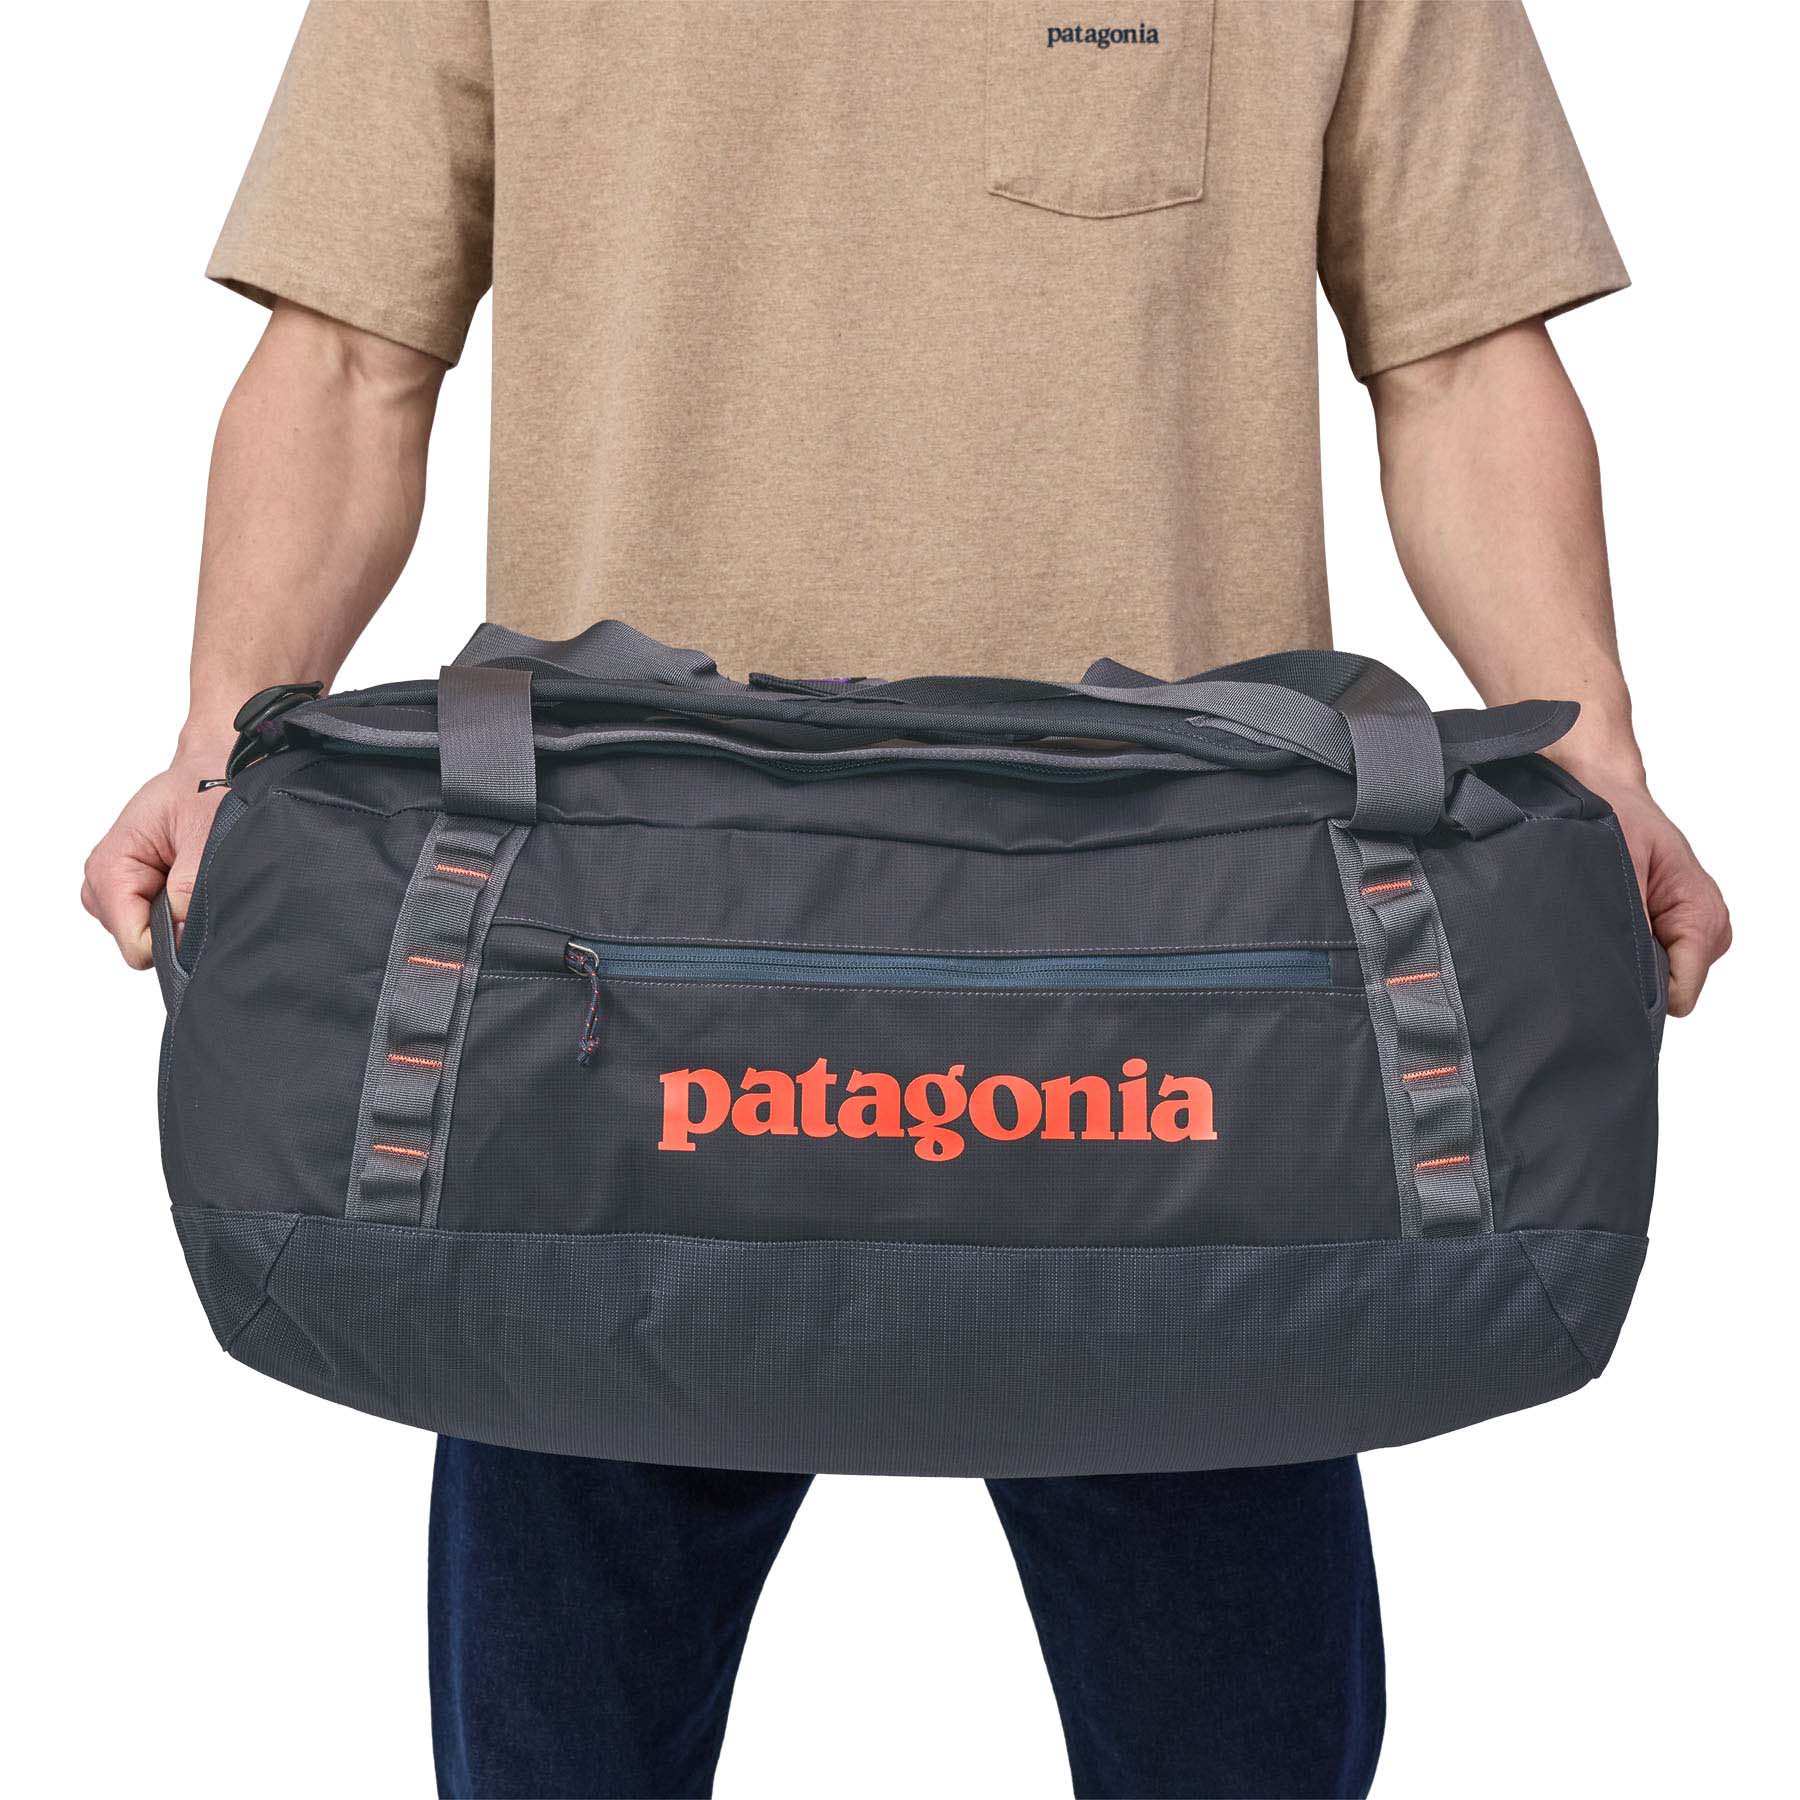 Patagonia Black Hole 55 Litre Duffel Bag